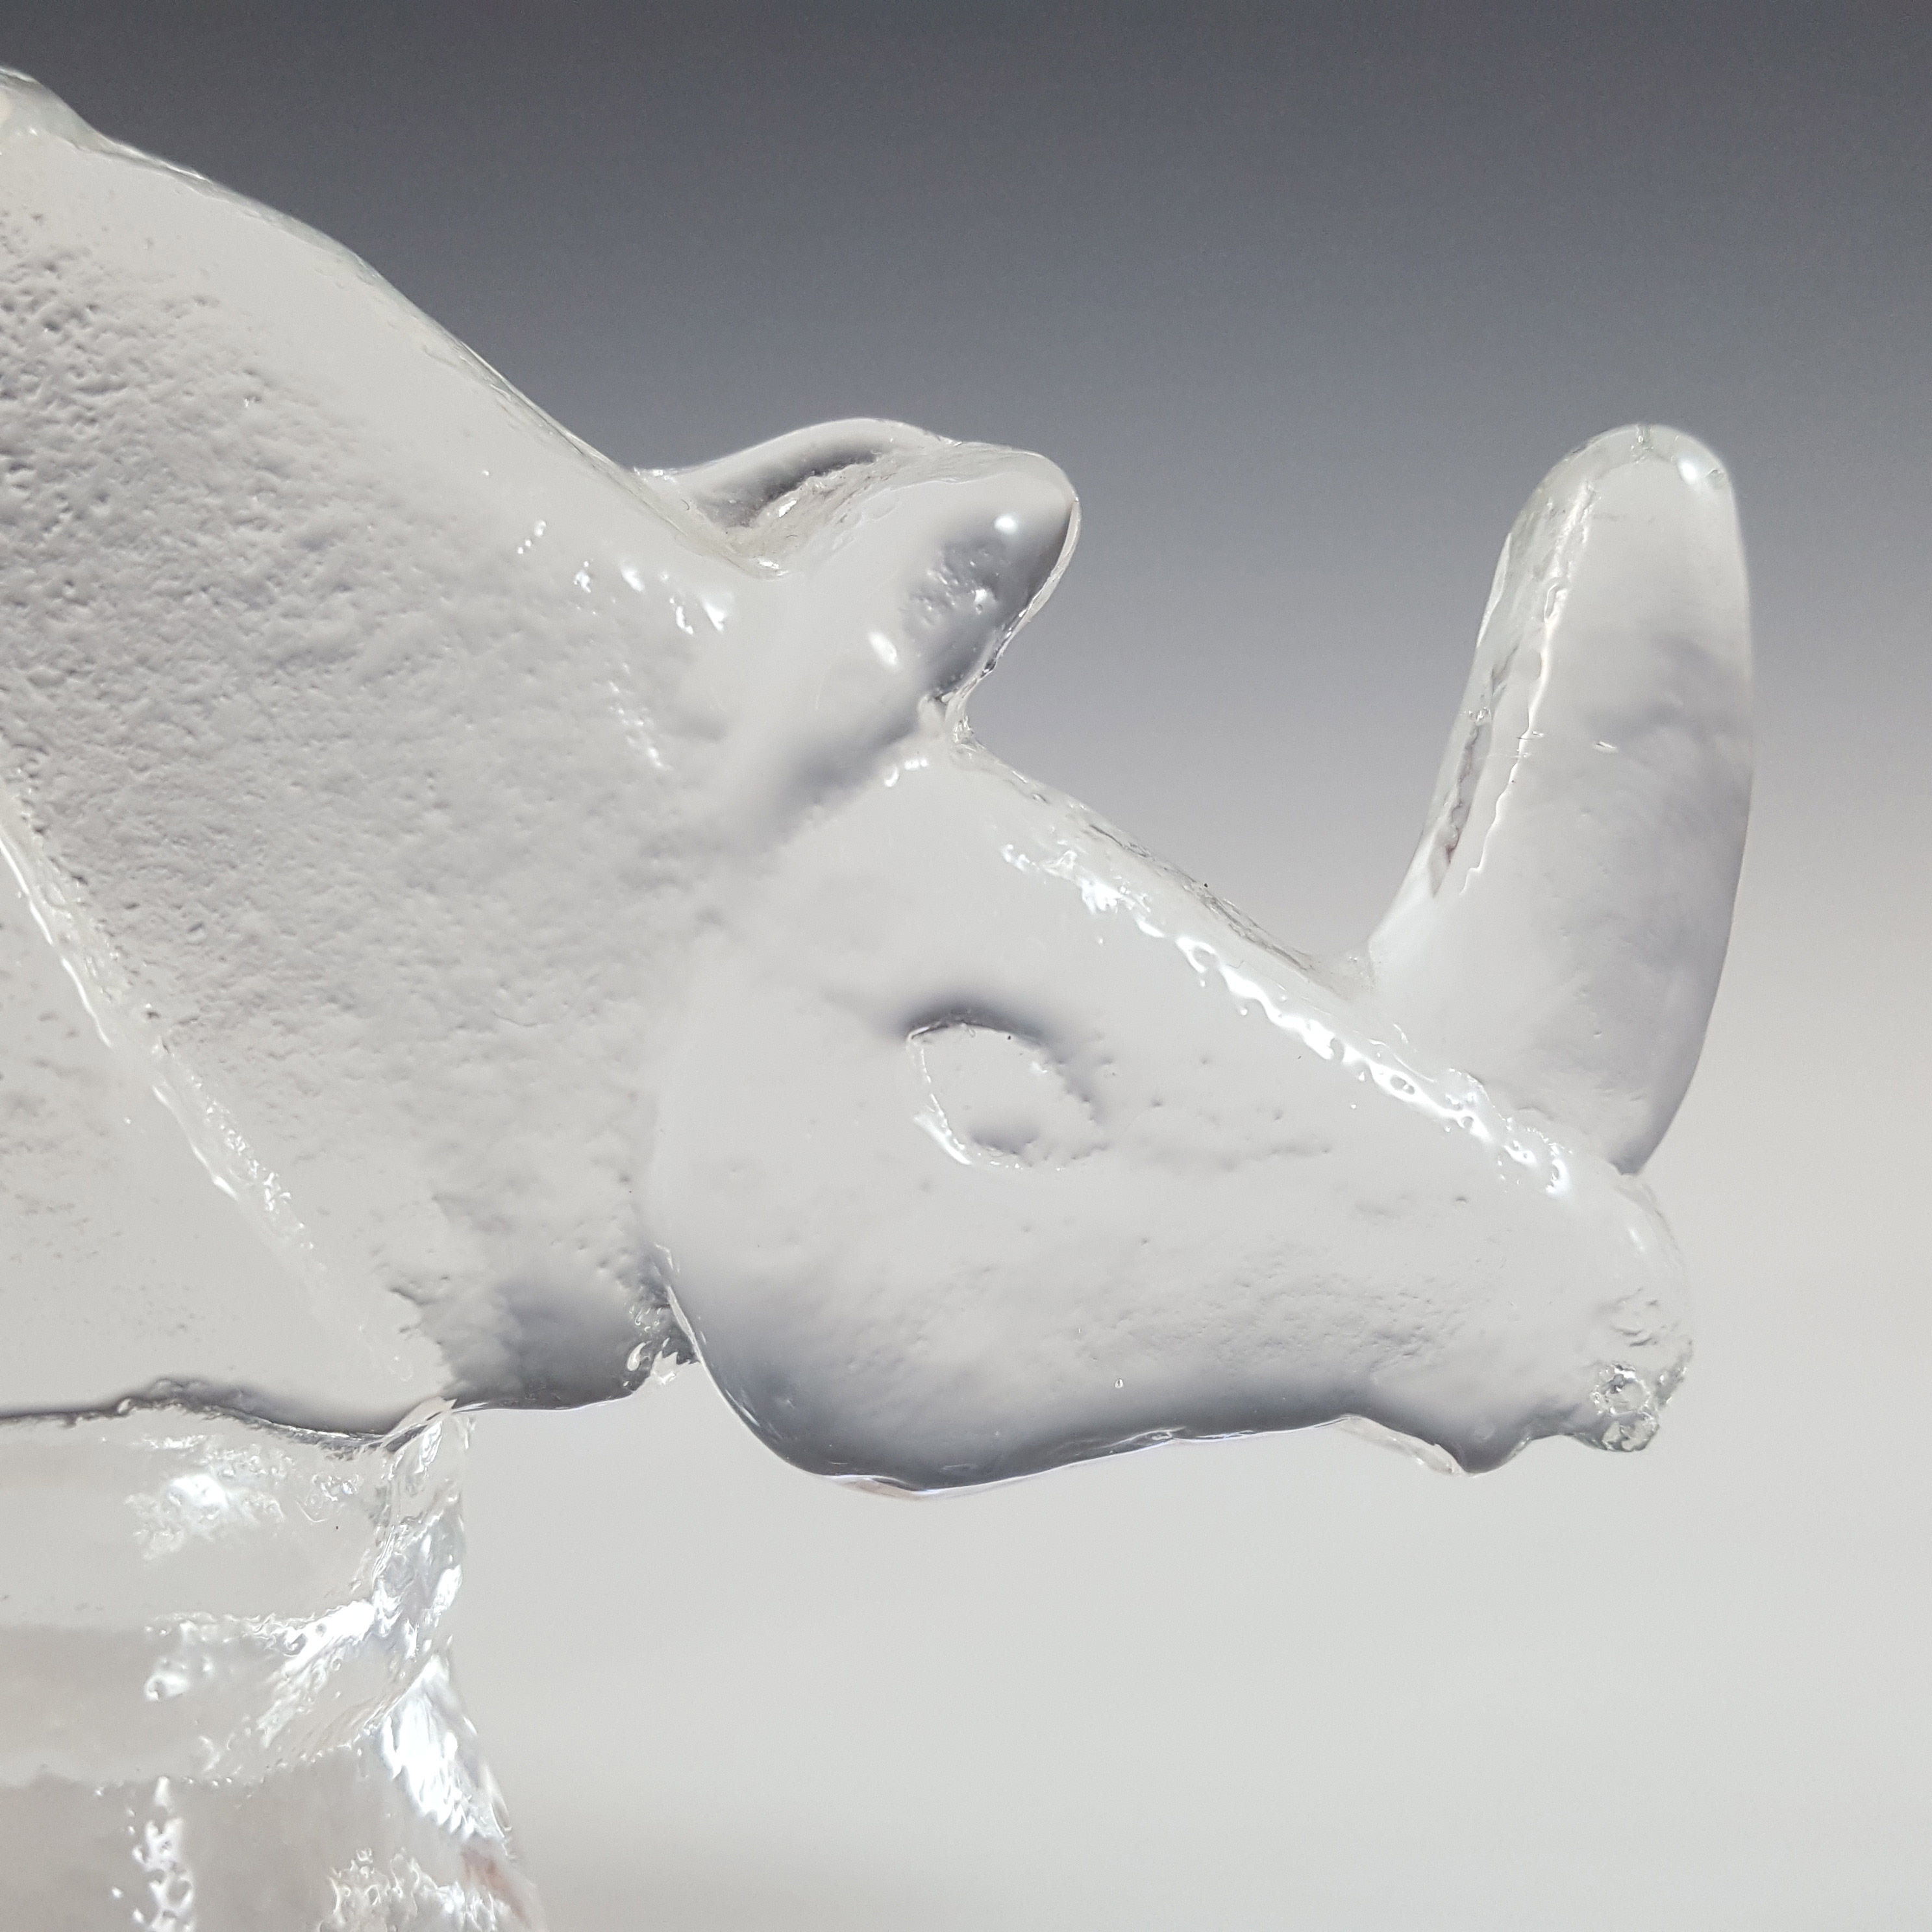 Kosta Boda Glass Rhino Sculpture - Zoo Series by Bertil Vallien - Click Image to Close